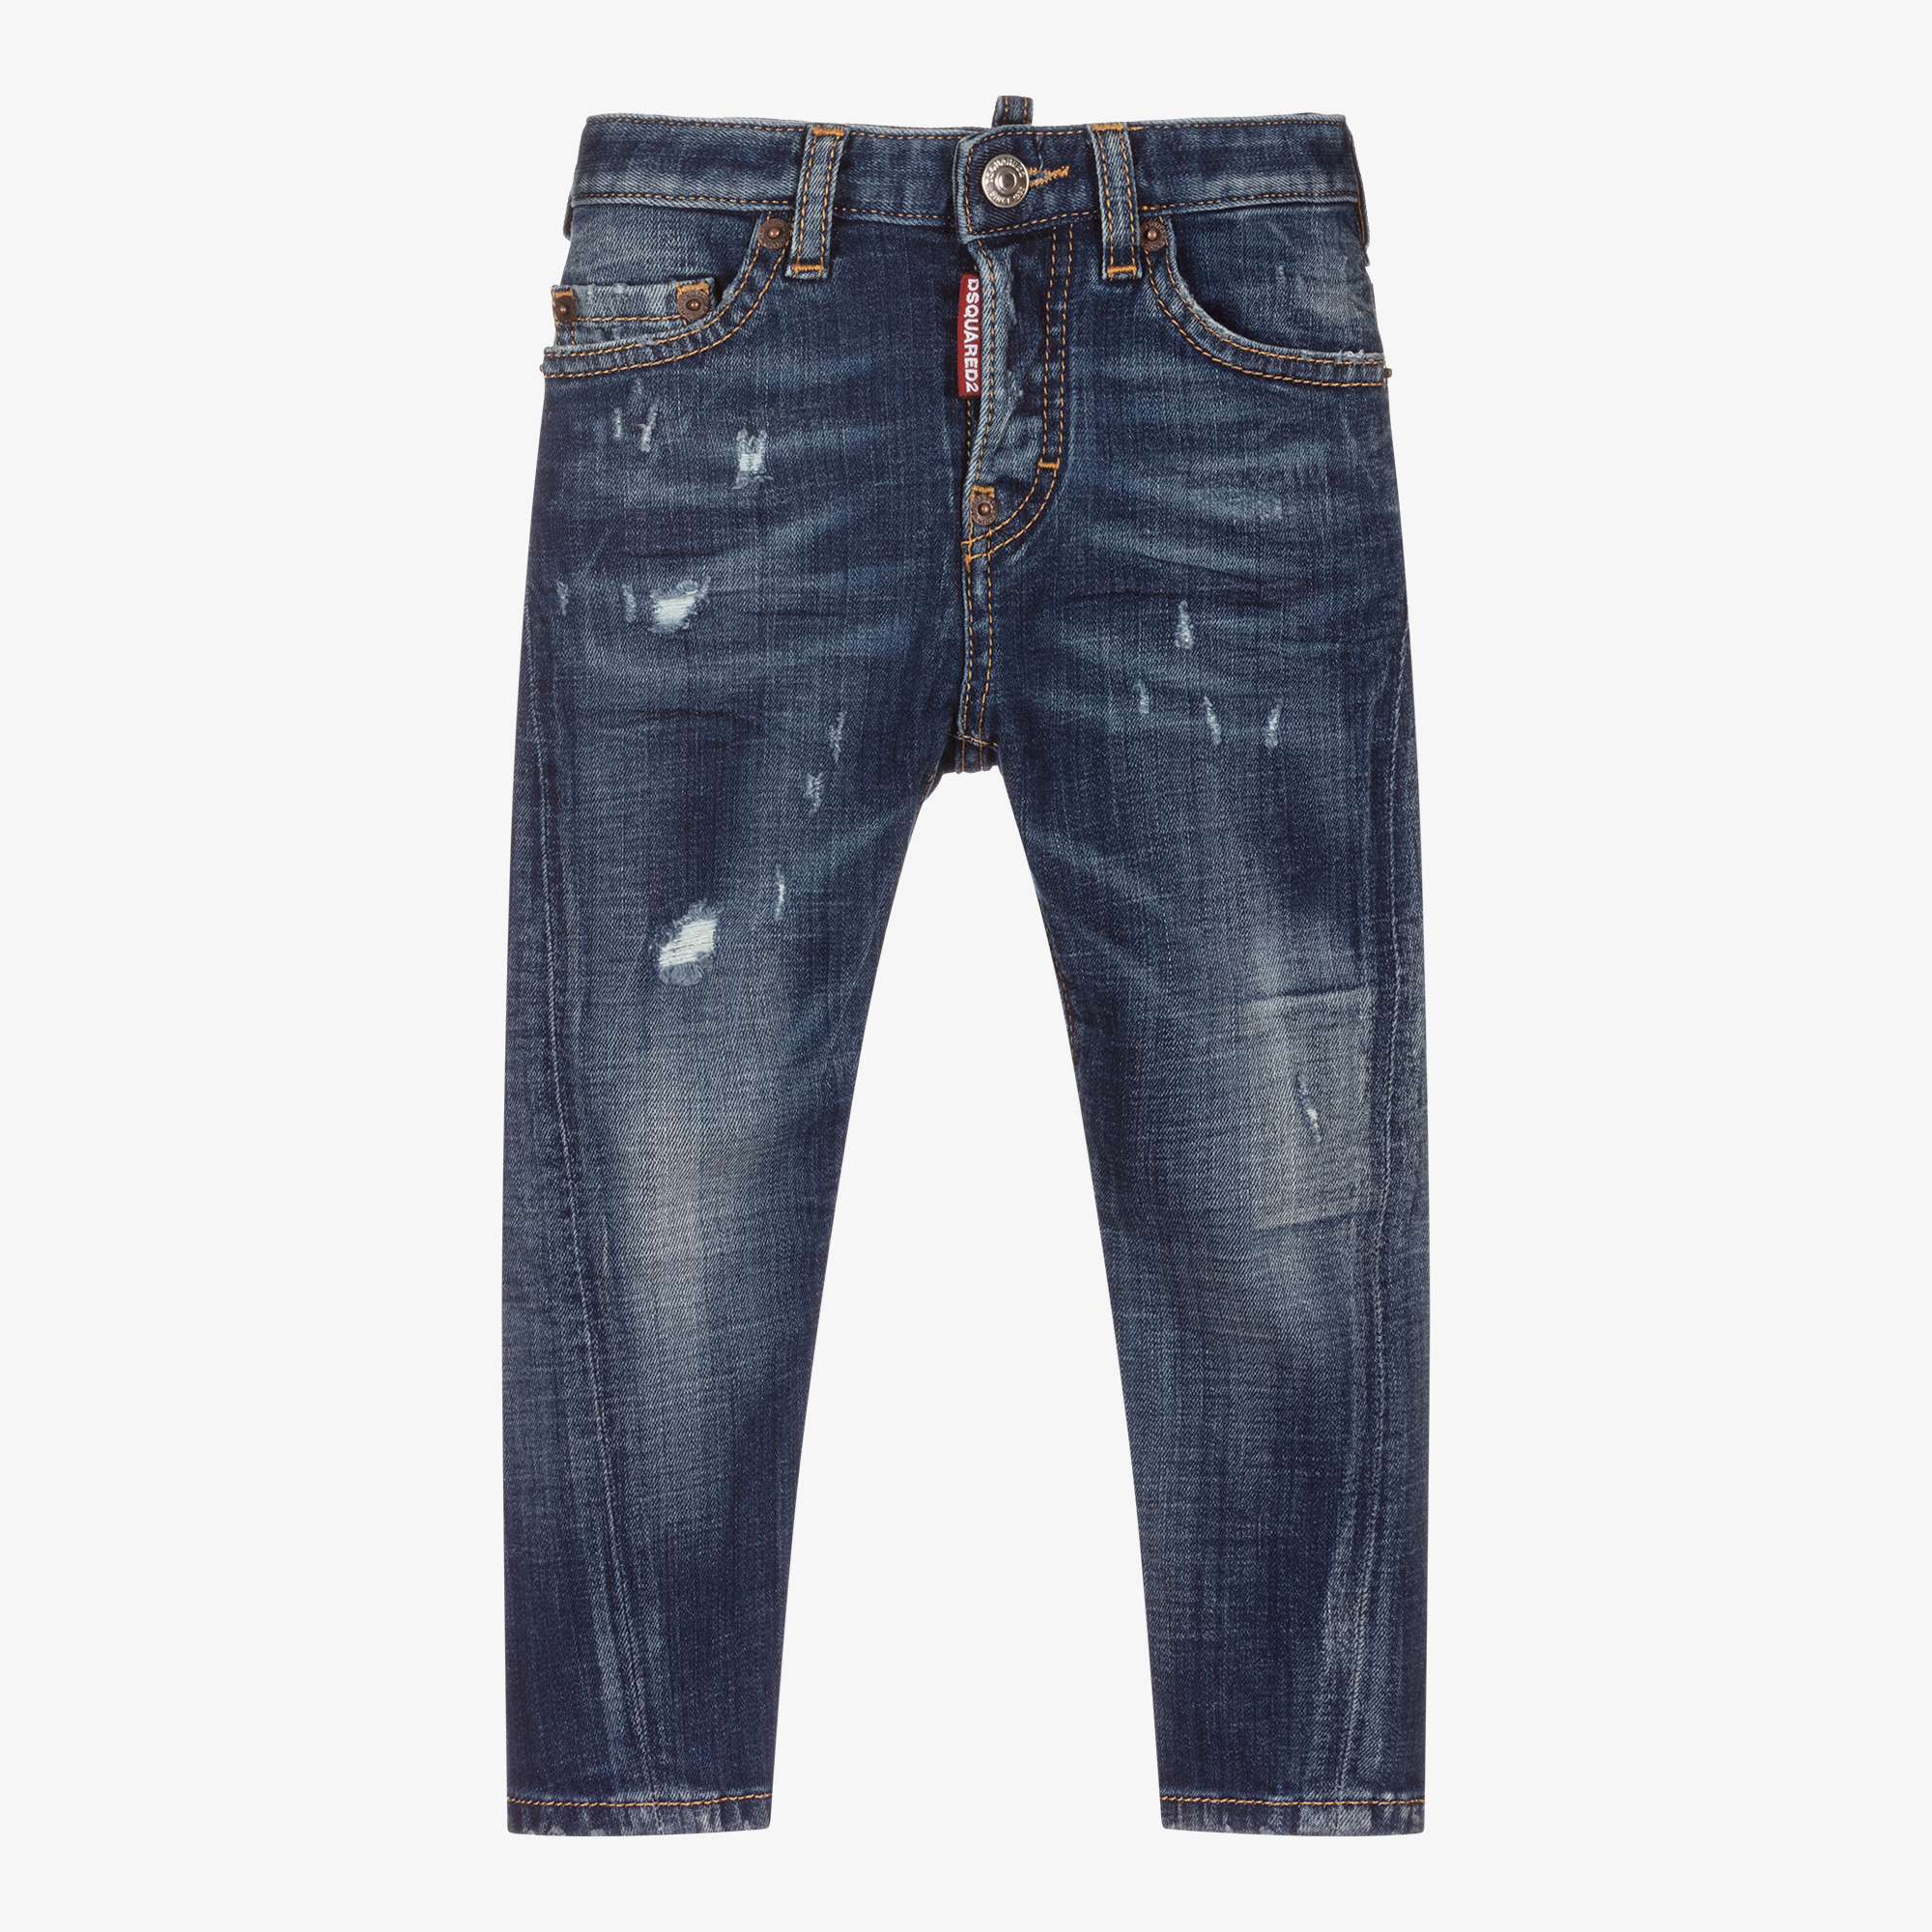 Slim Jeans Dsquared2 - FR 46, buy pre-owned at 80 EUR